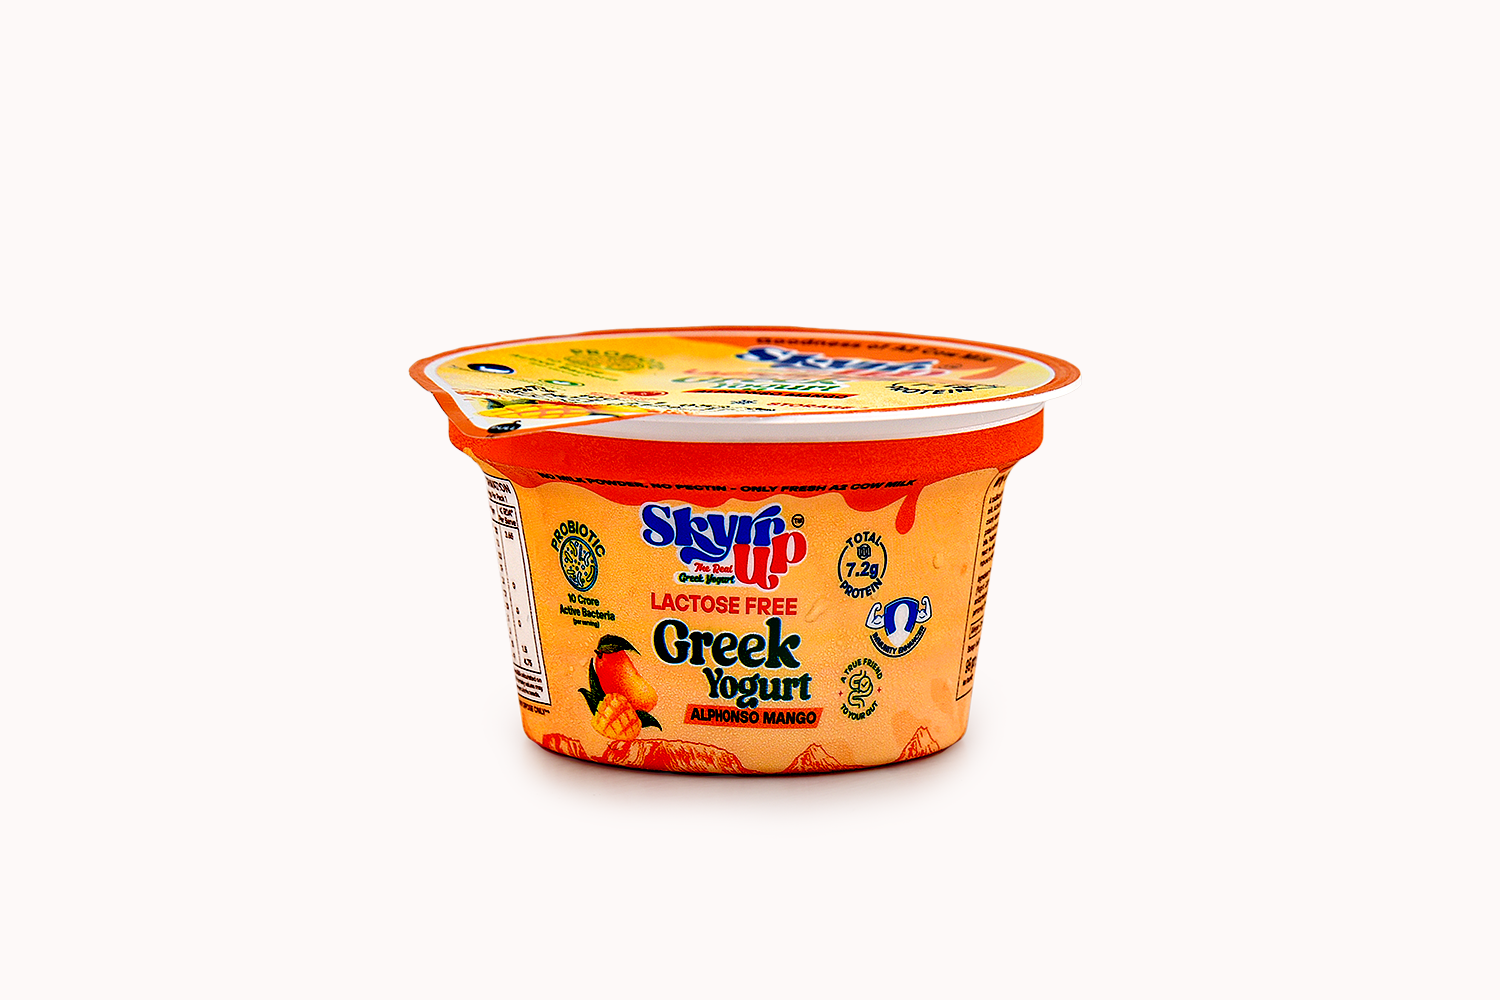 Skyrrup Alphonso Mango Lactose-Free Greek Yoghurt